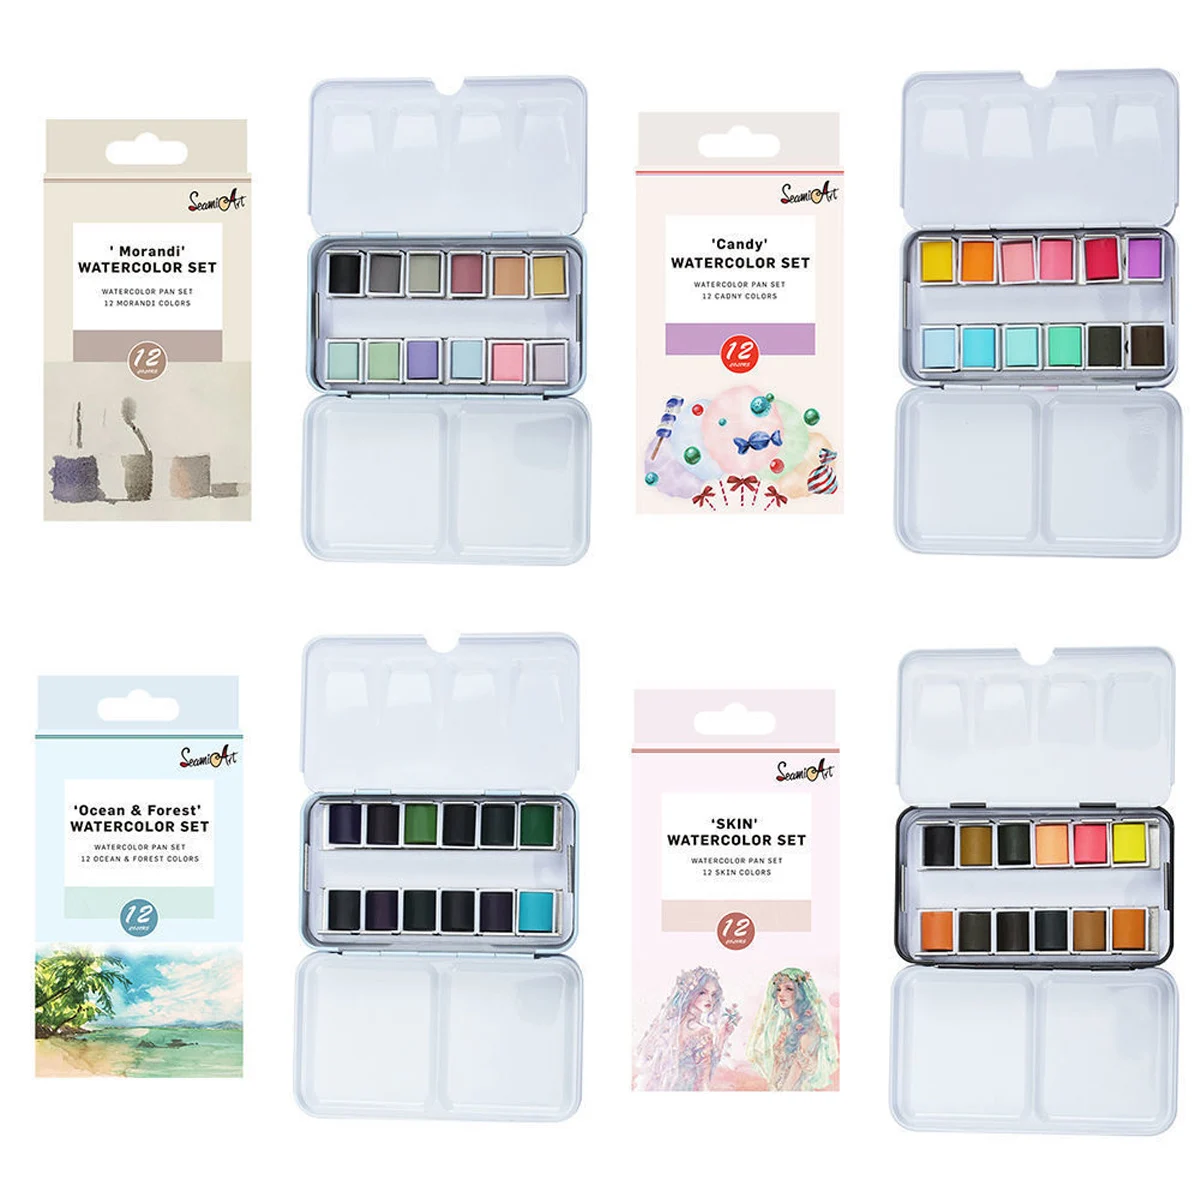 12 Colors Solid Watercolor Set for Artist Water Color Painting Art Supplies Skin/Ocean/Candy/Morandi Watercolor Paint Set